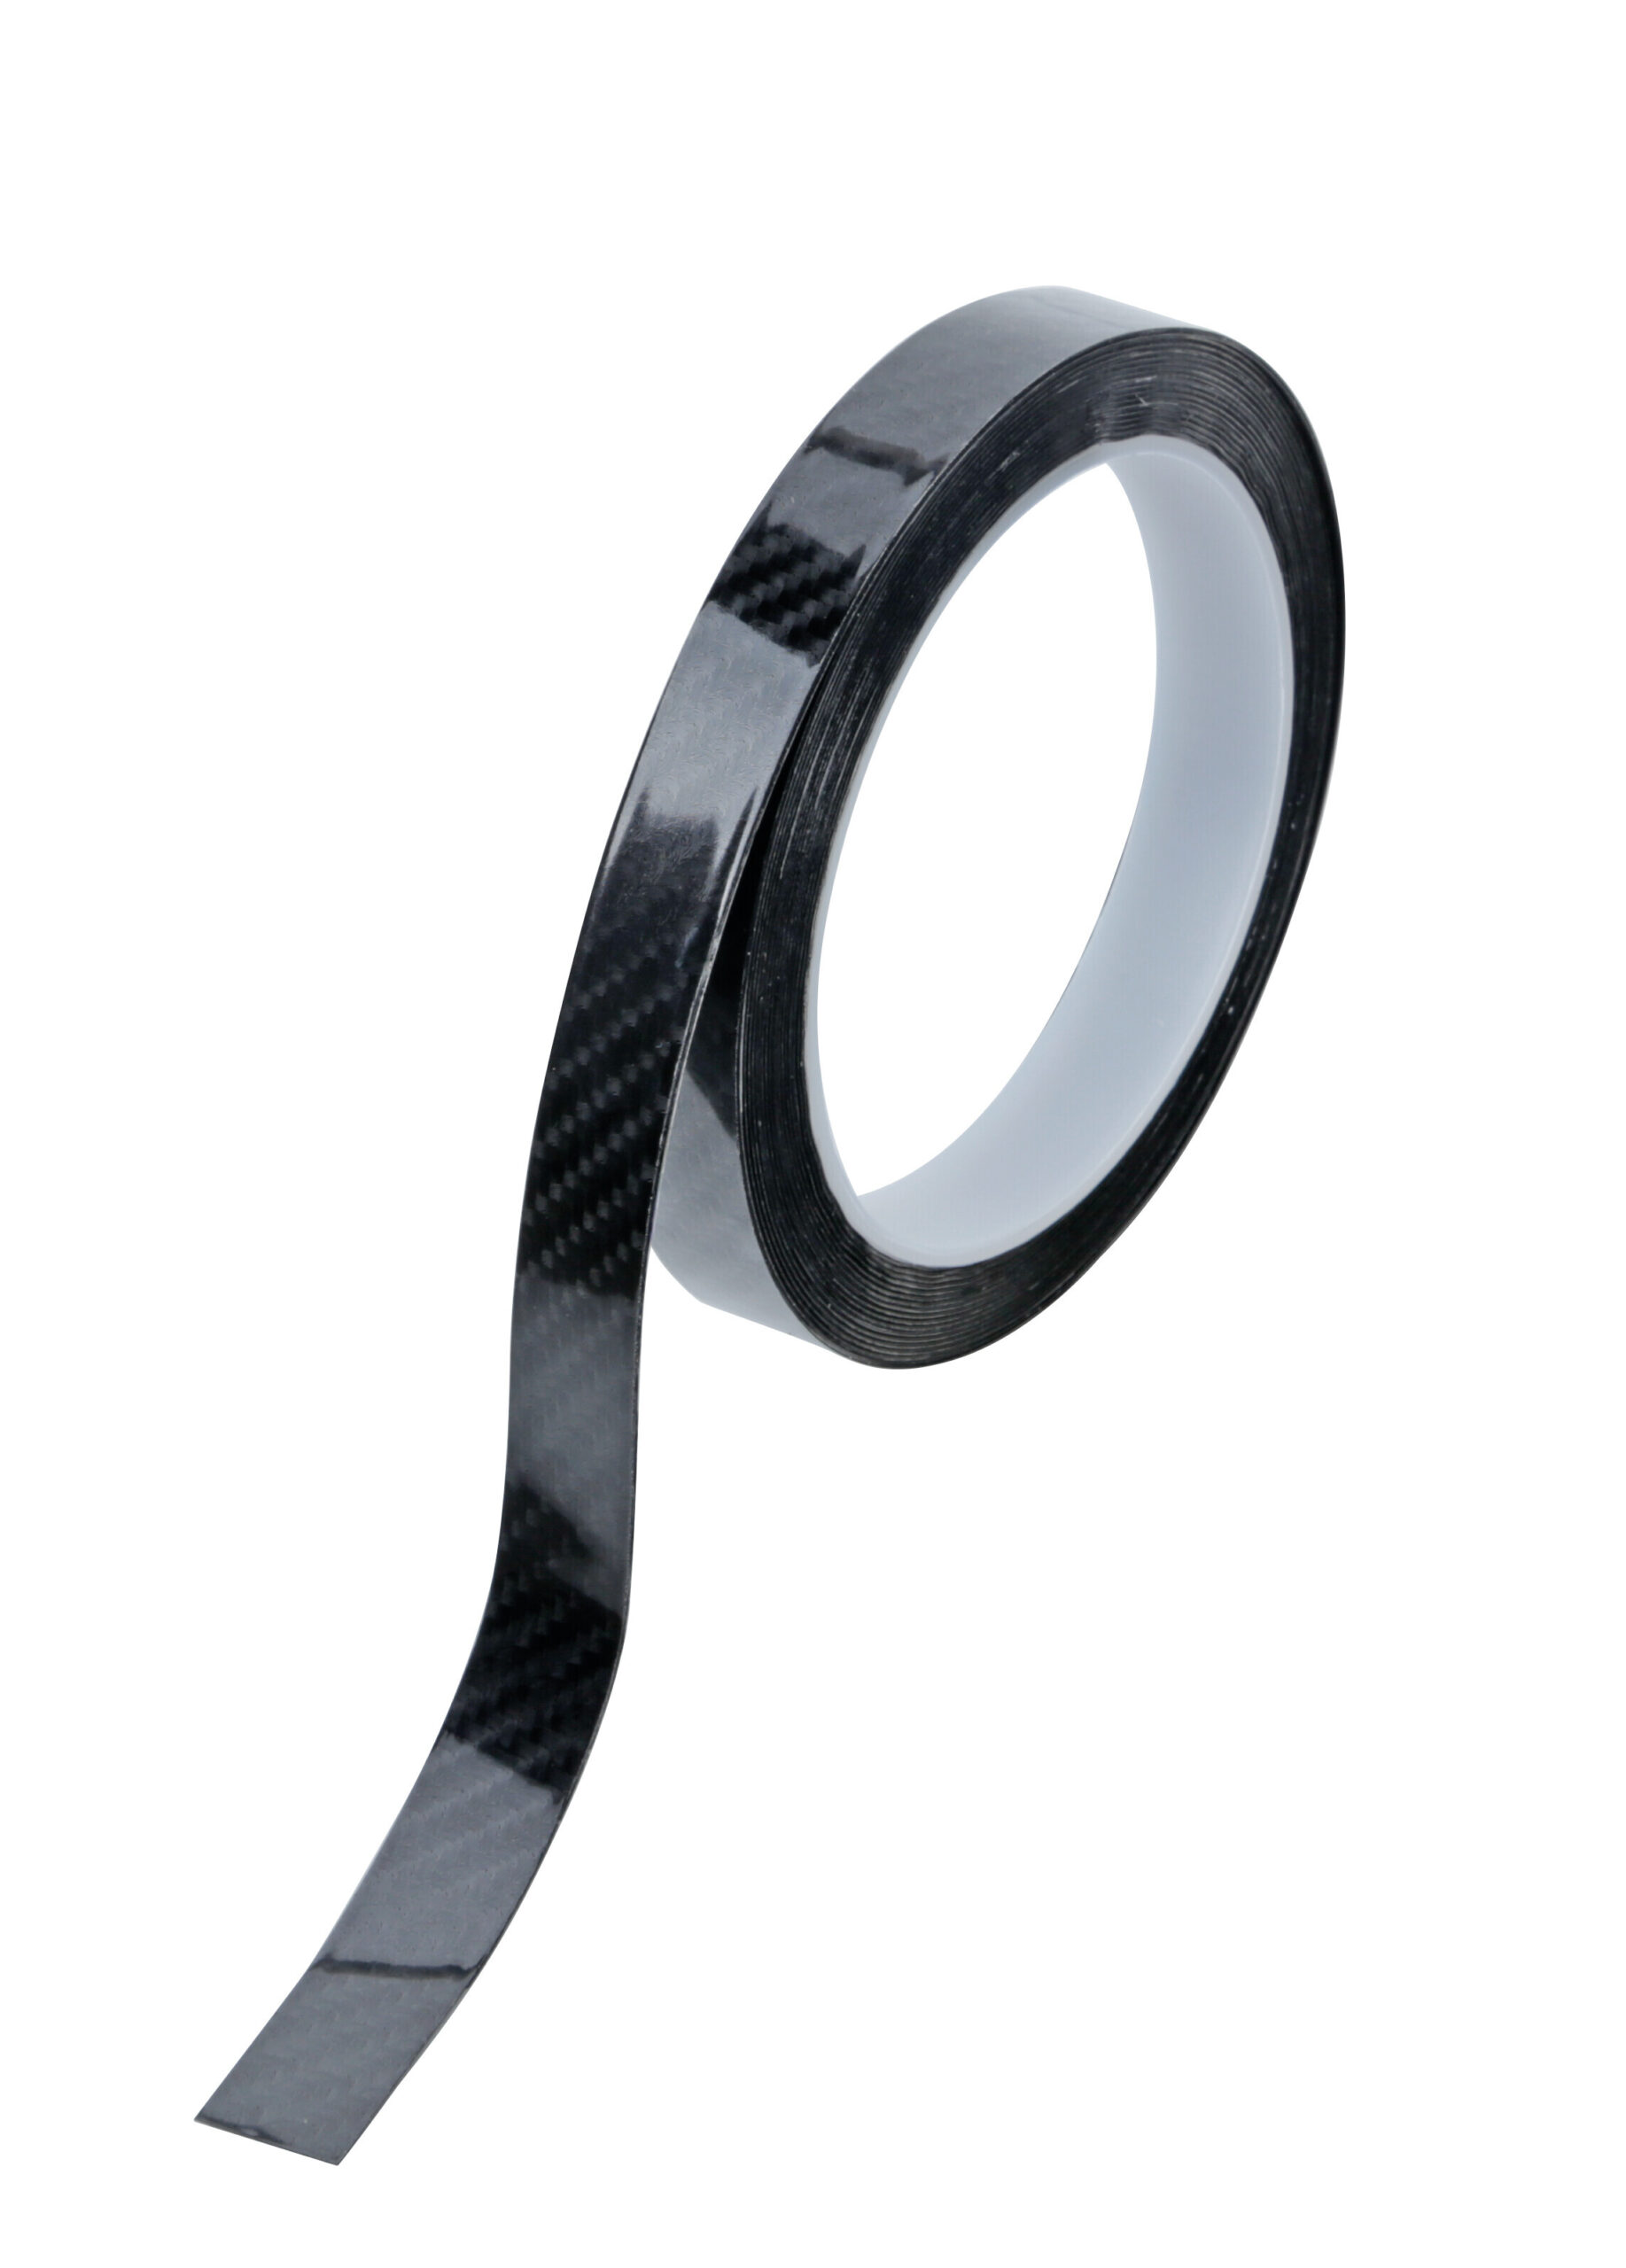 Carbon-Look Tape, nastro adesivo decorativo effetto carbonio - 500x1,5 cm